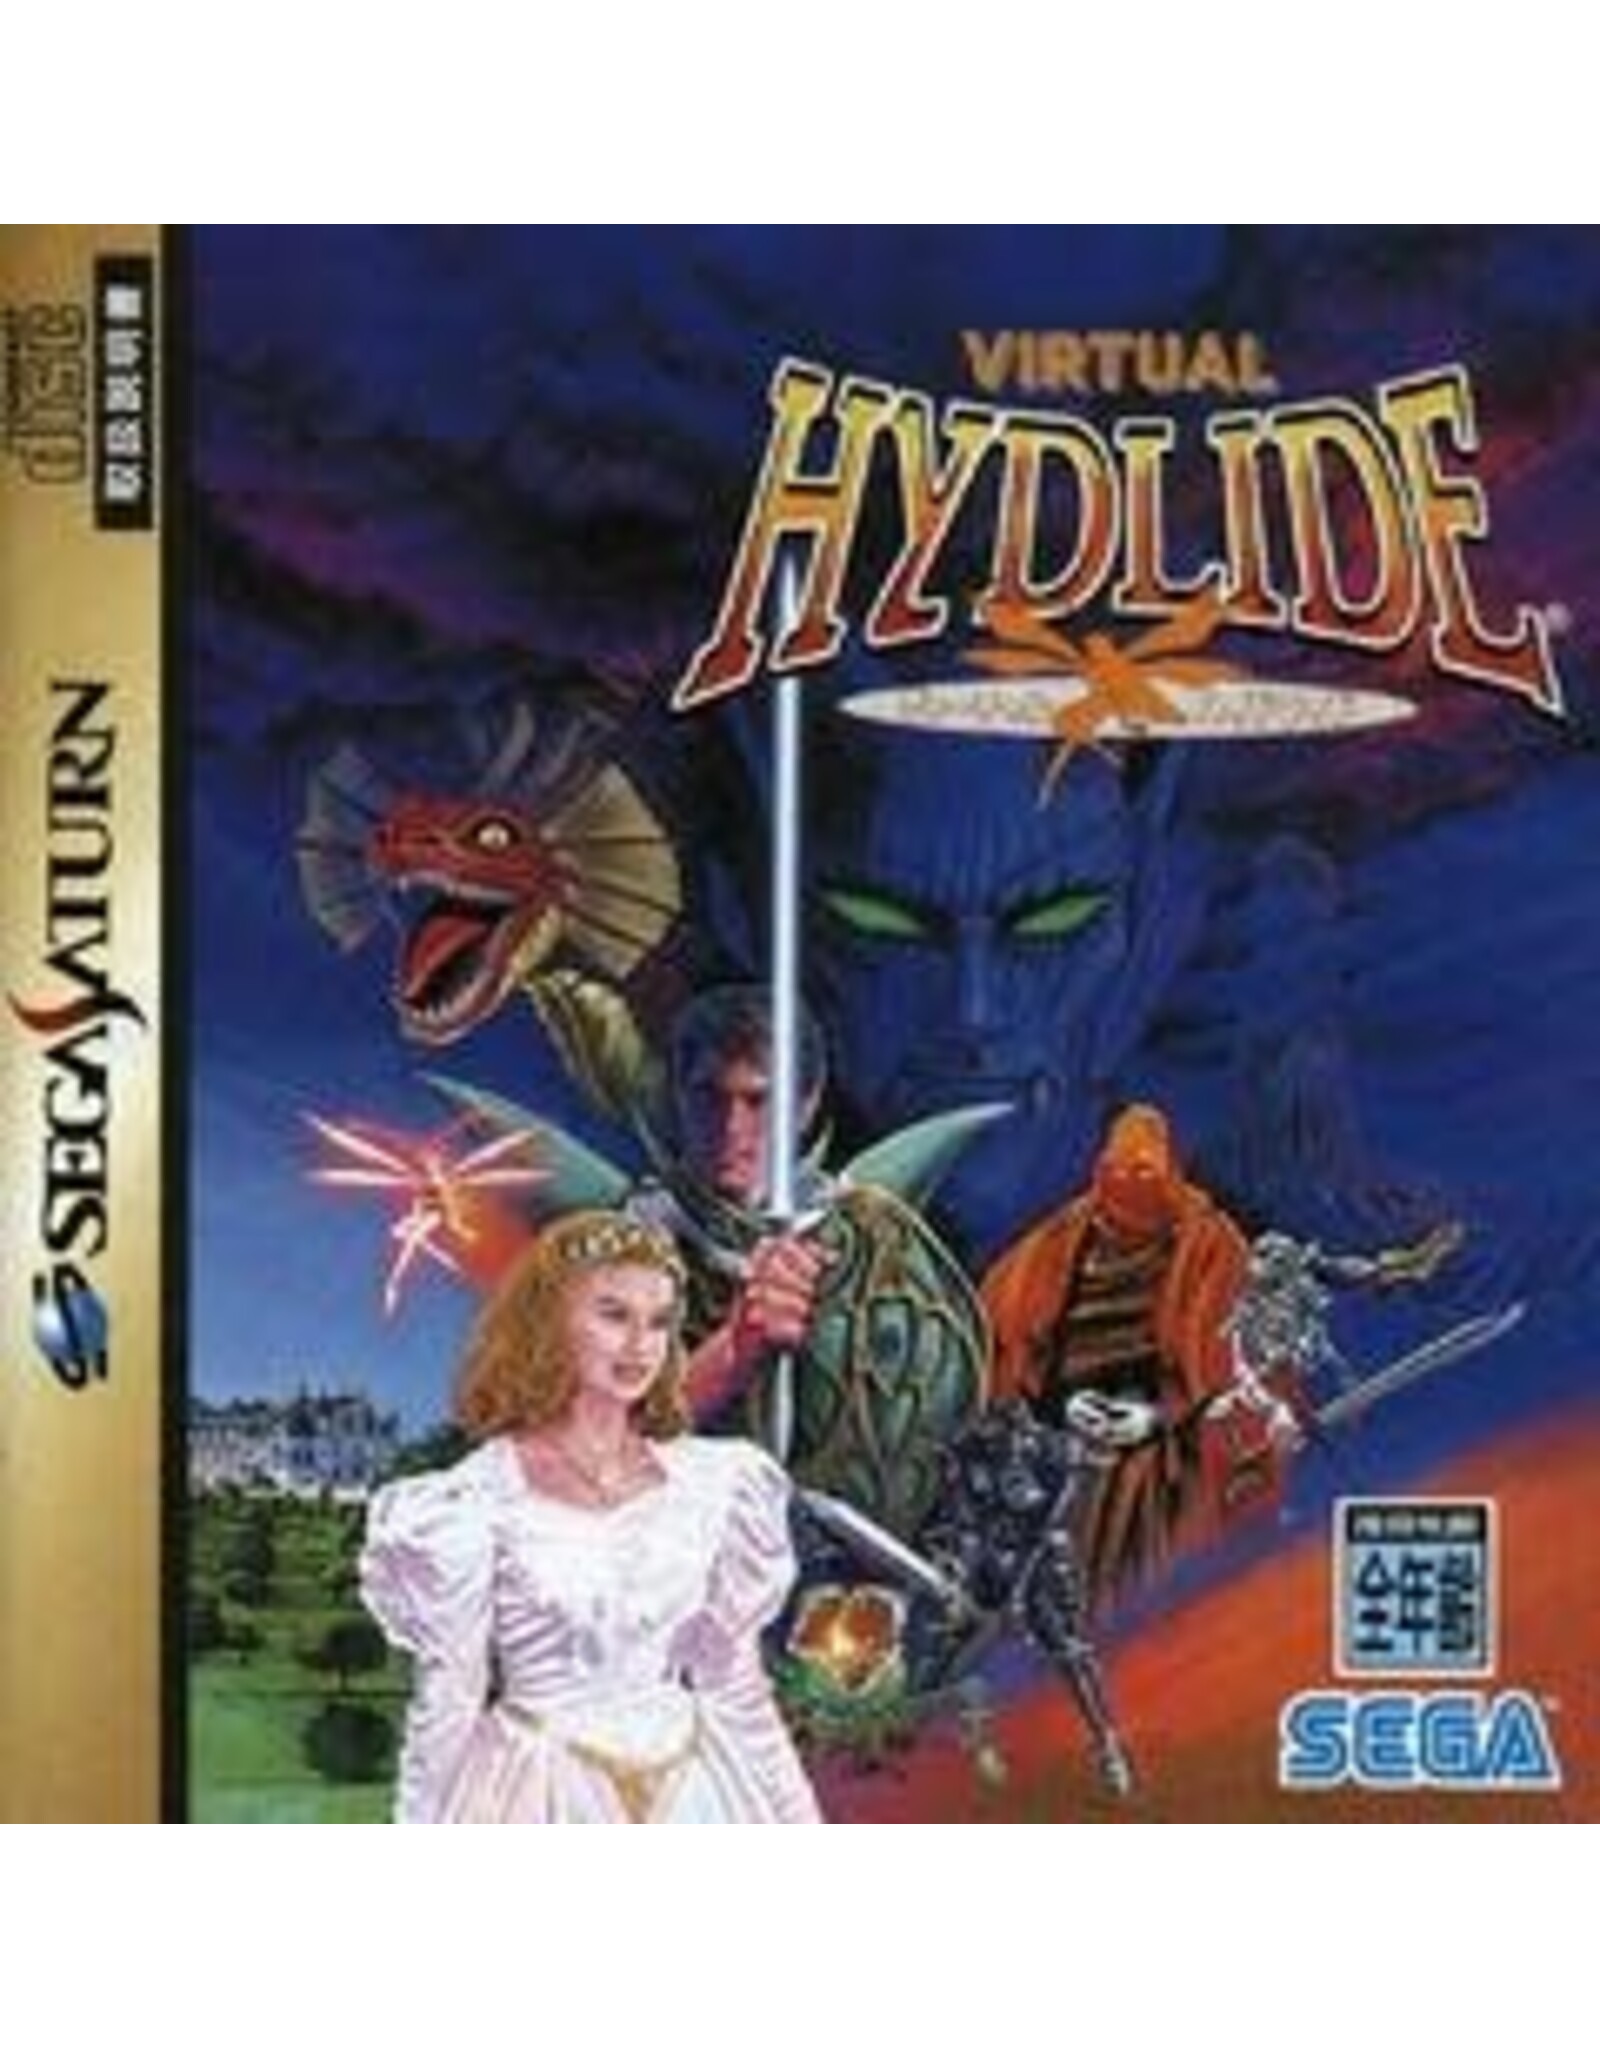 Sega Saturn Virtual Hydlide - JP Import (Used)